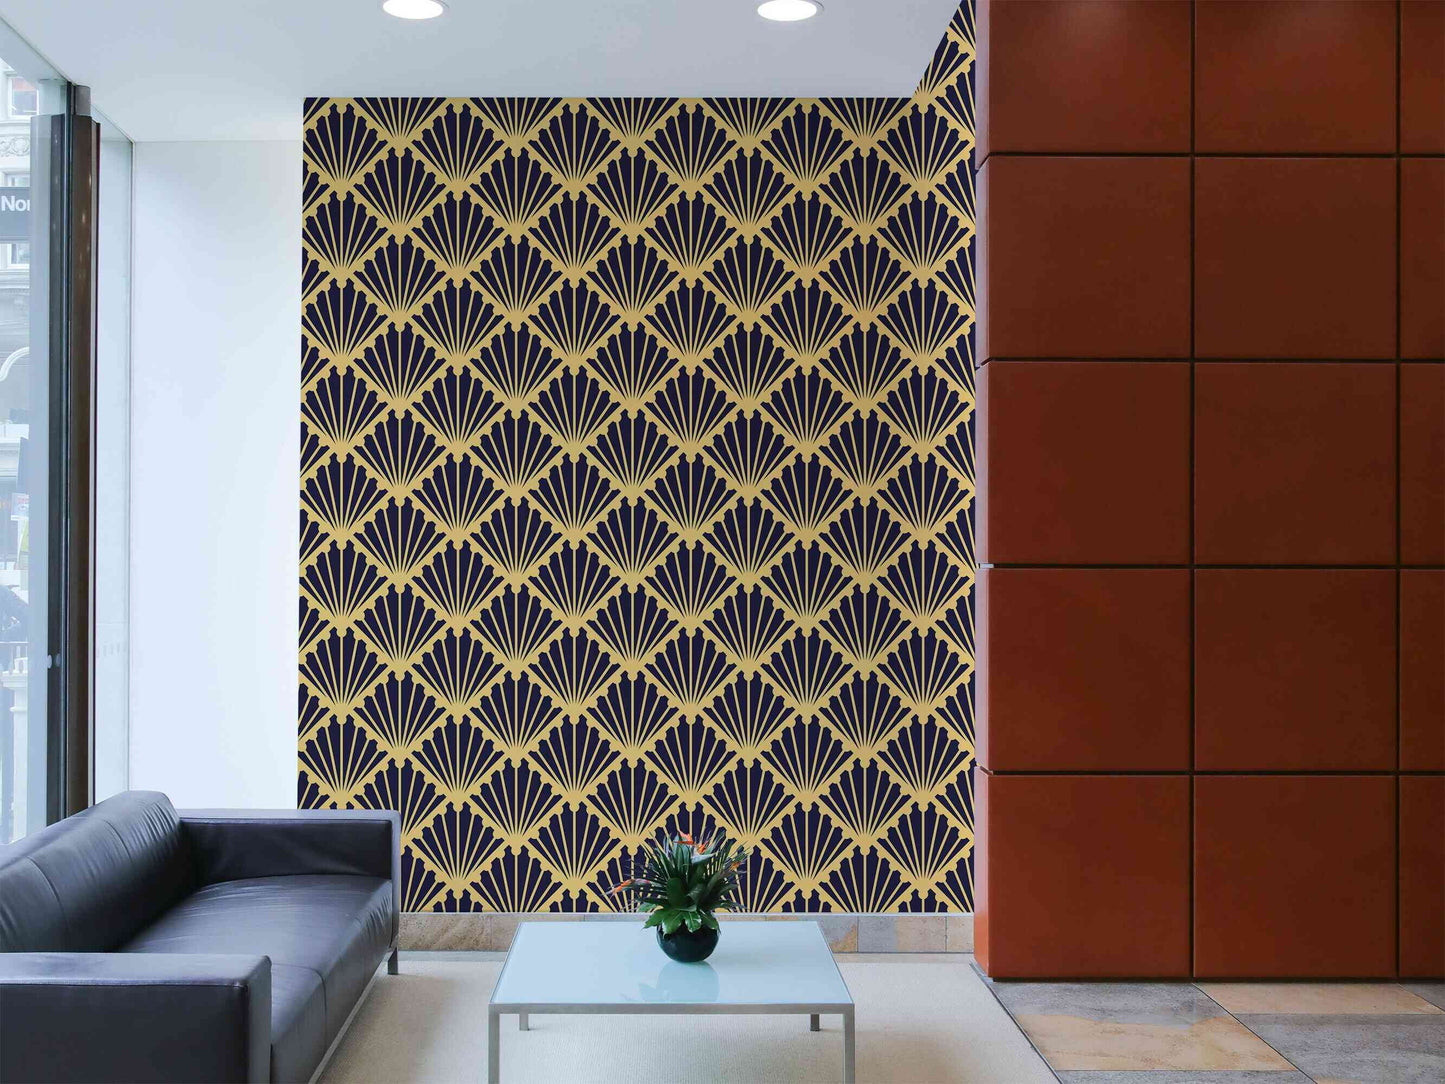 Elegant floral pattern wallpaper for a sophisticated interior.